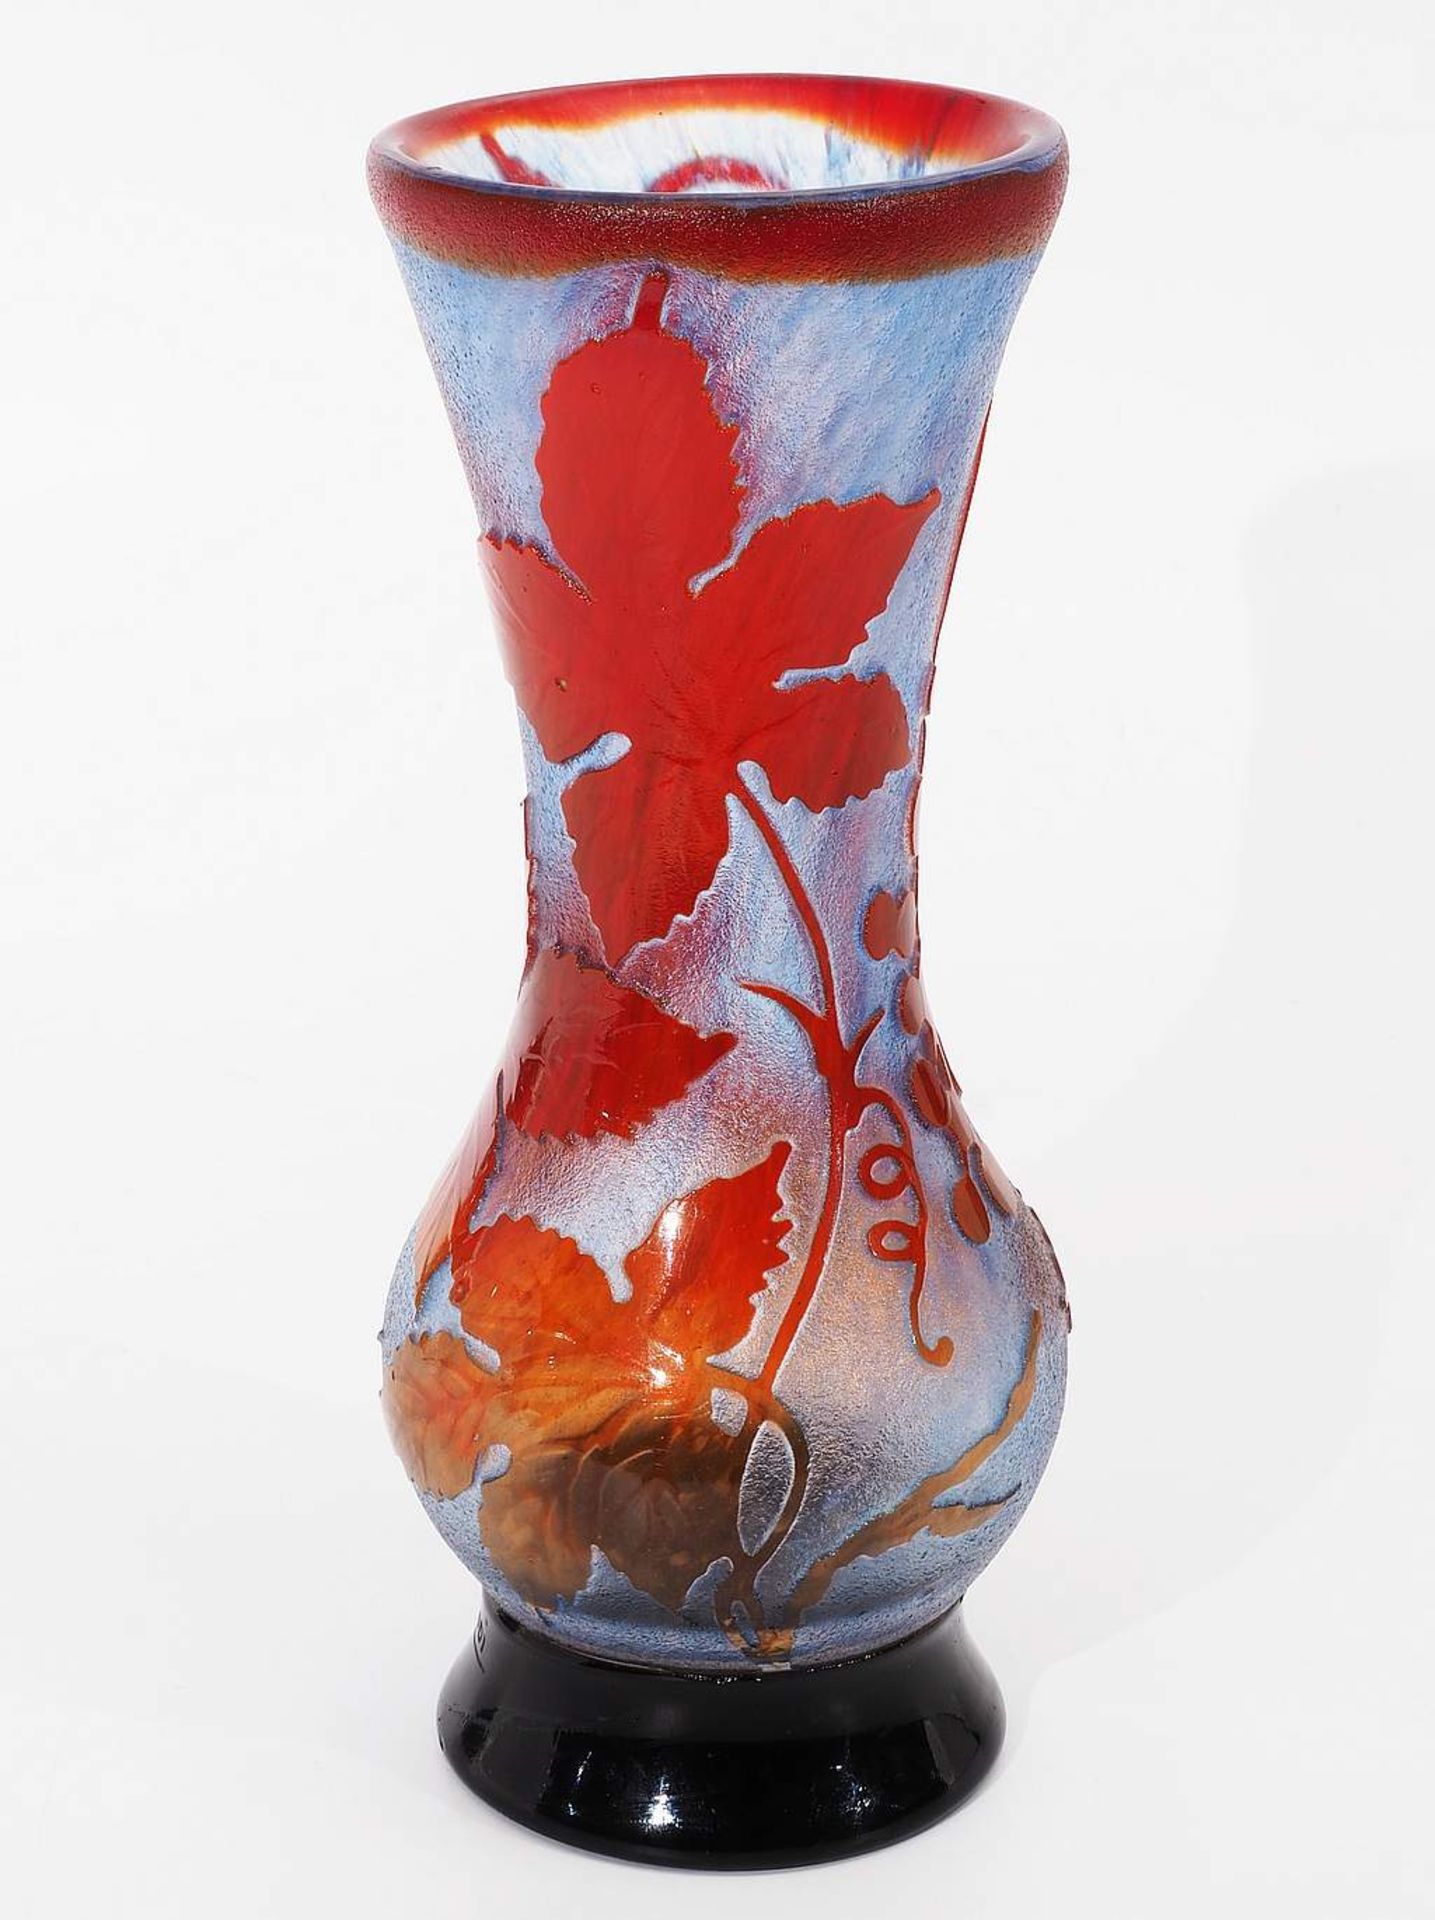 Jugendstil Vase mit erhabenem Weinlaubdekor - Image 2 of 7